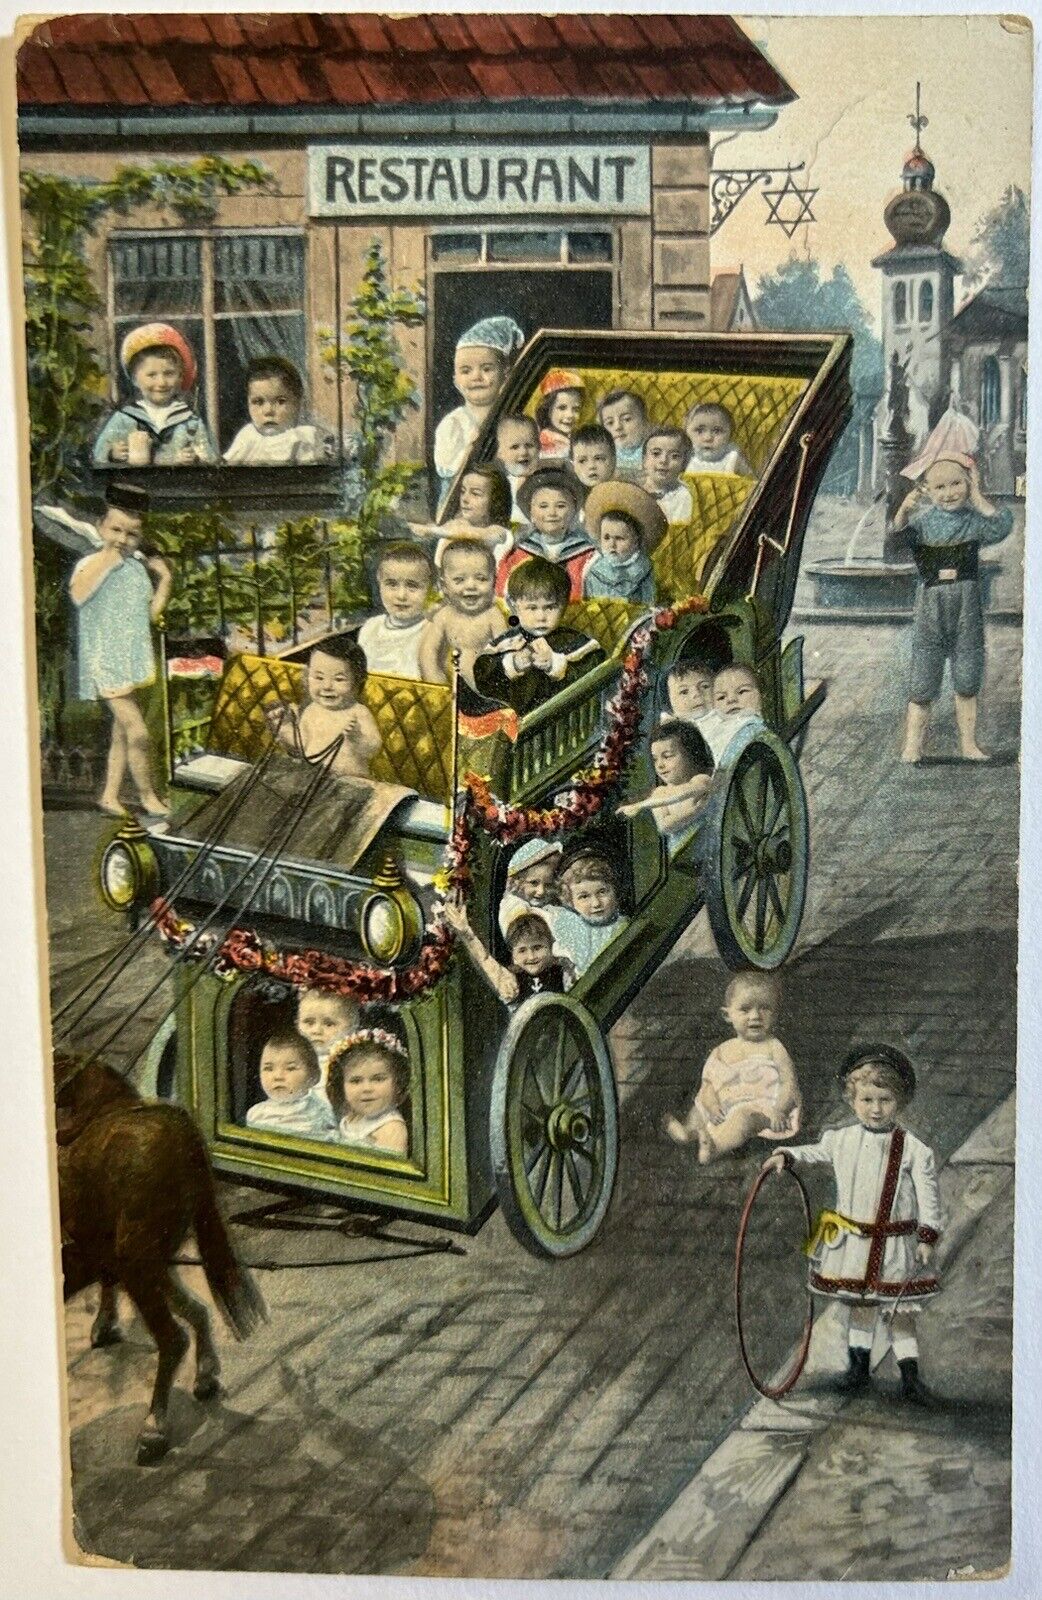 KVIB 1913 Postcard, Antique Card Babies in Carriage, Restaurant, Street Scene